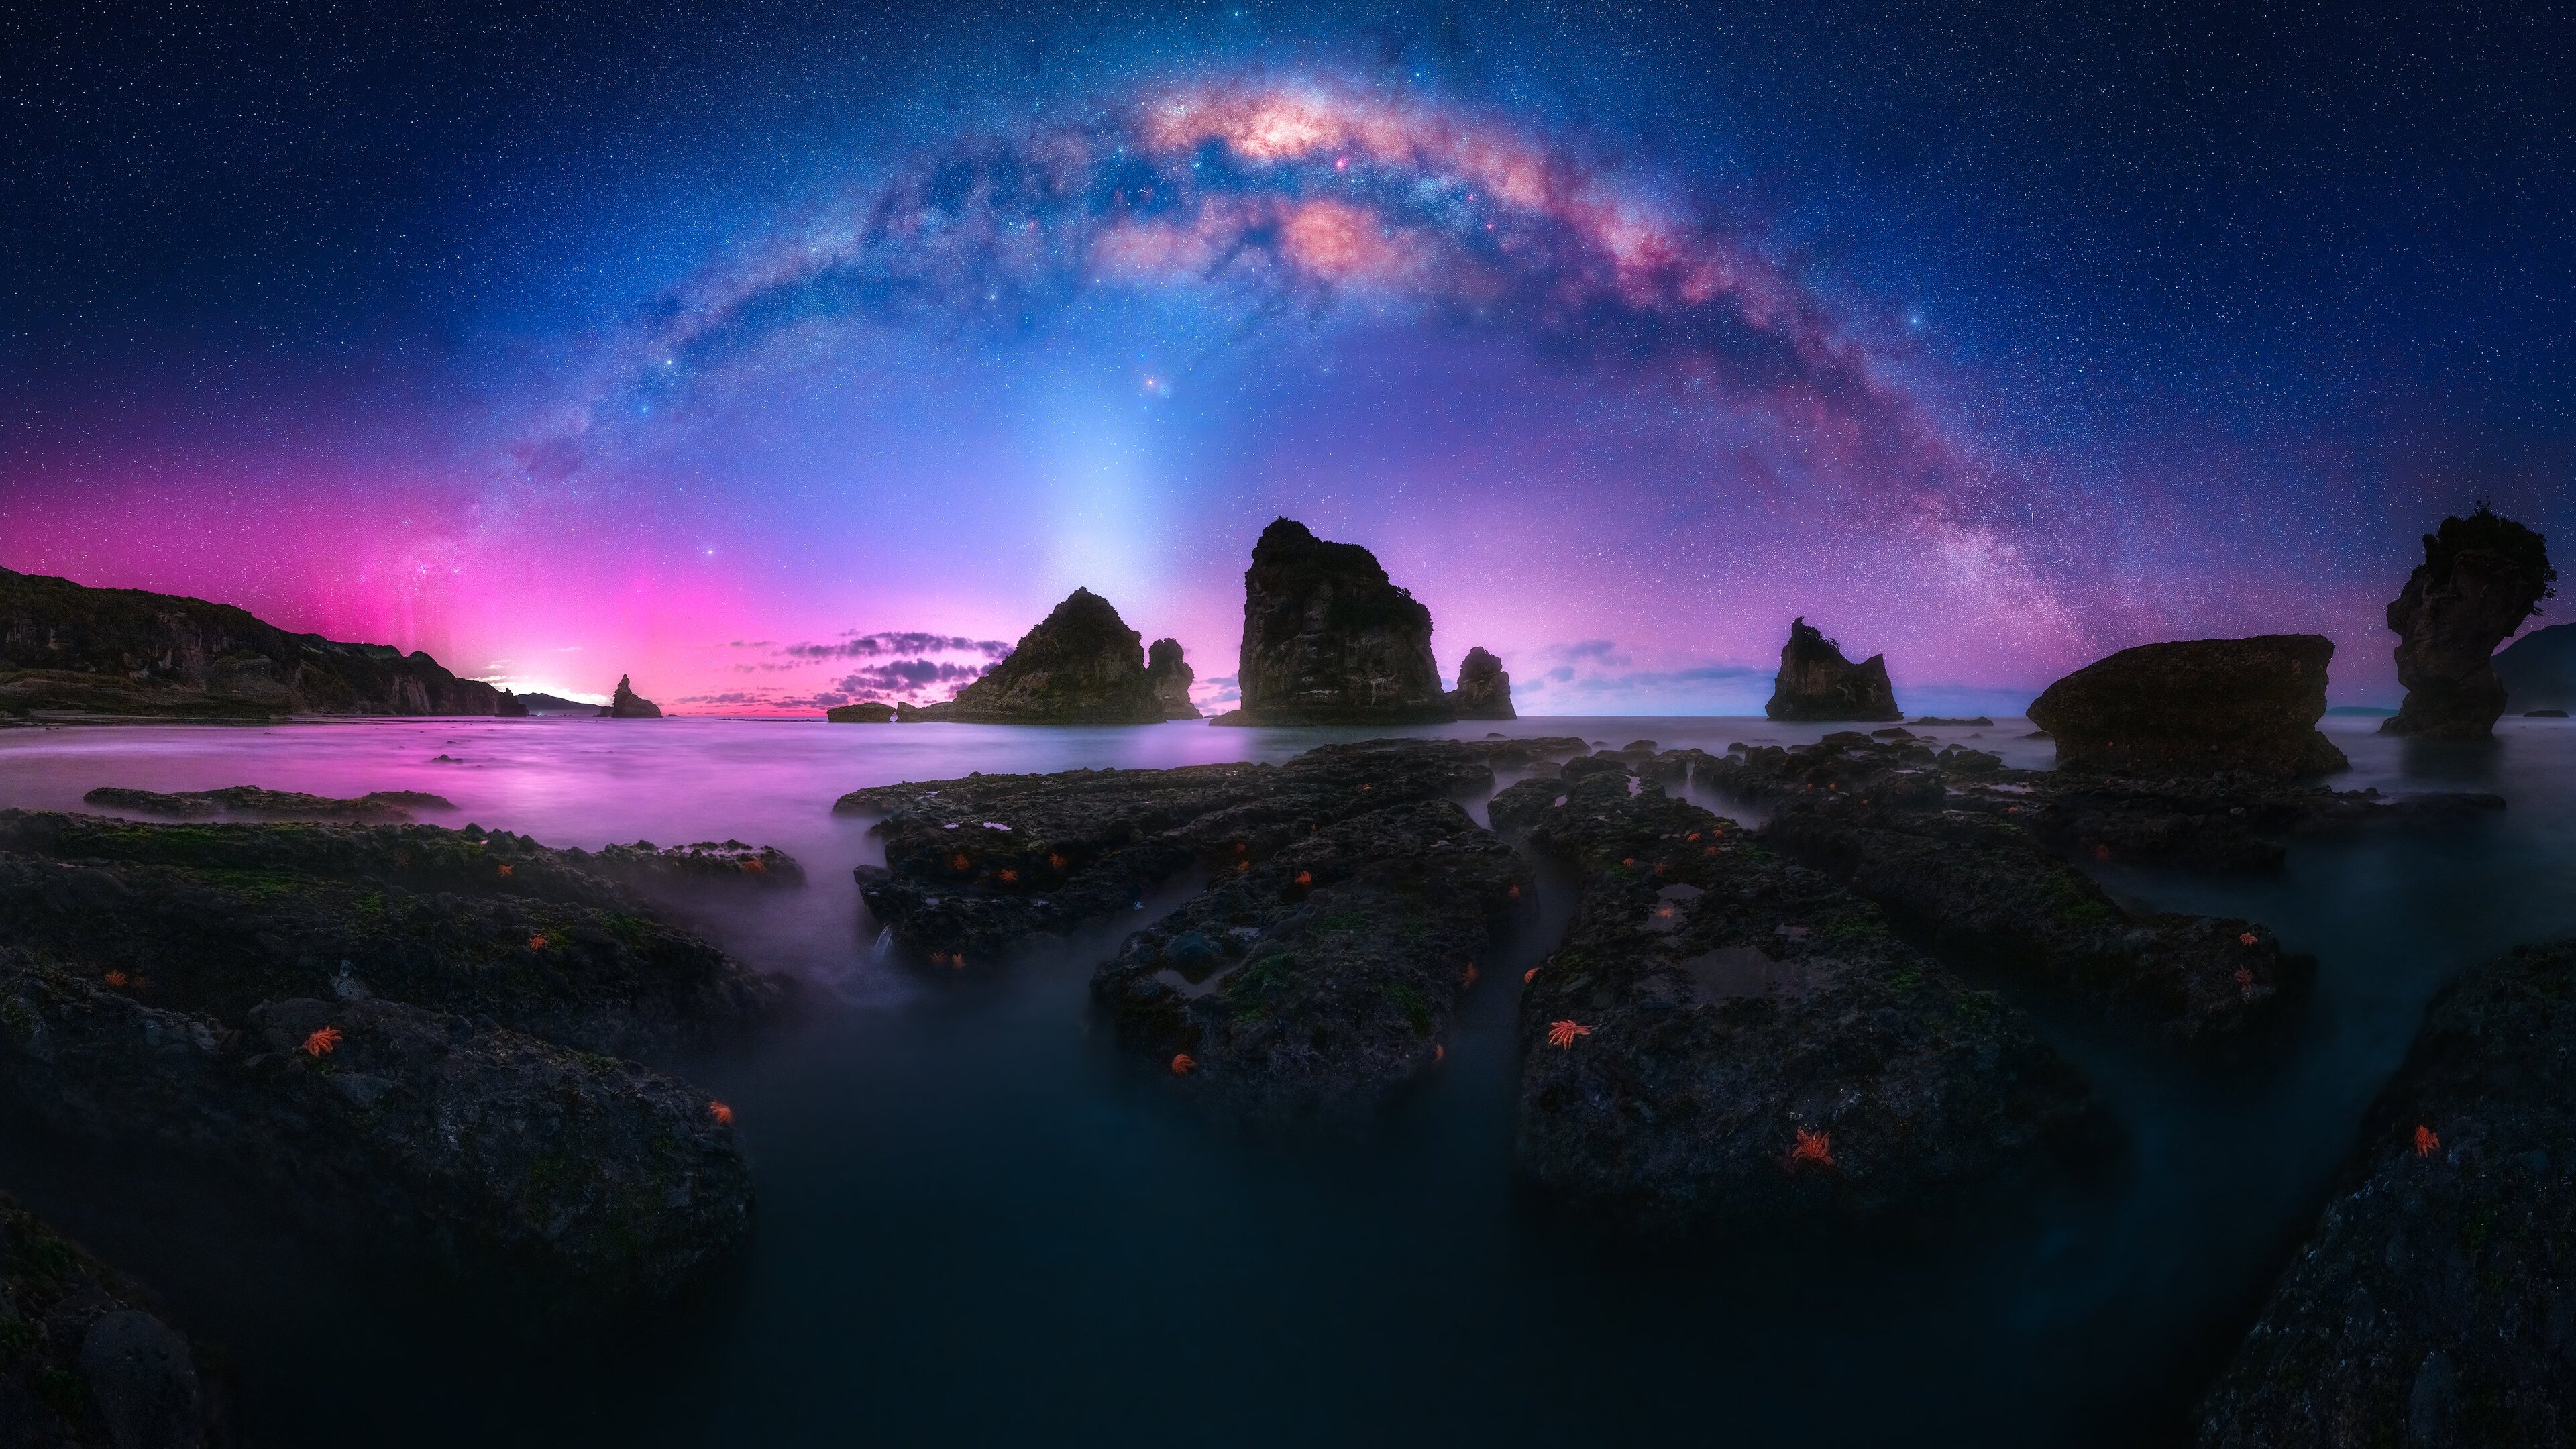 General 3840x2160 nature landscape sea coast rocks night sky stars Milky Way reflection long exposure